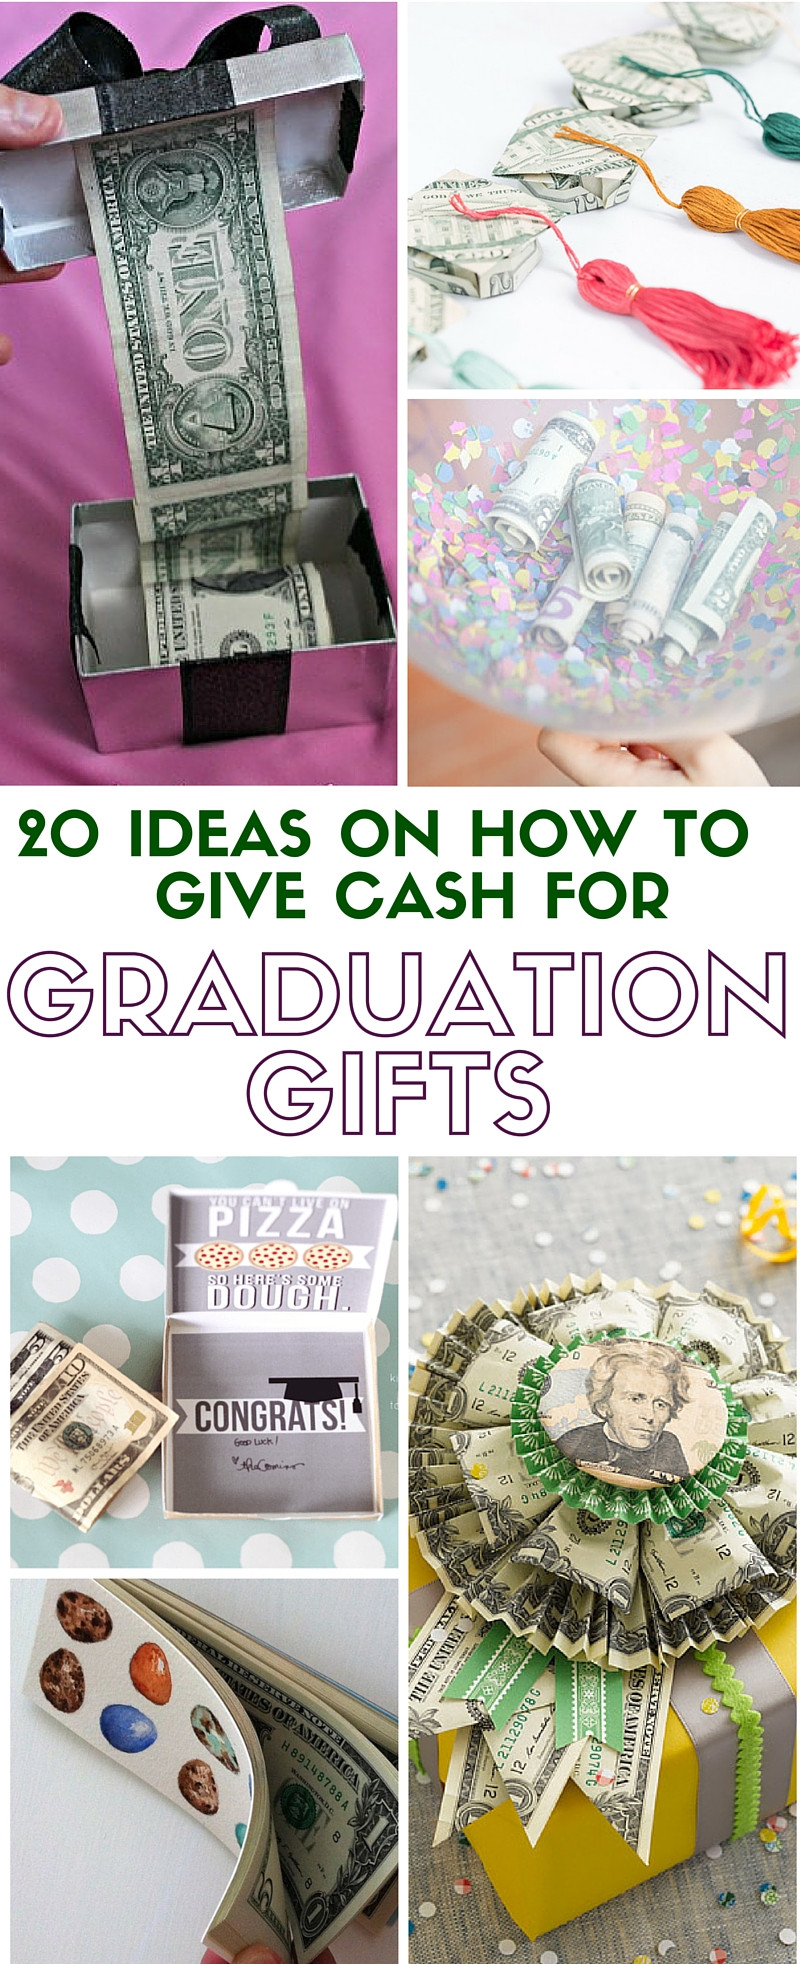 Grad School Graduation Gift Ideas
 31 Back To School Teacher Gift Ideas The Crafty Blog Stalker